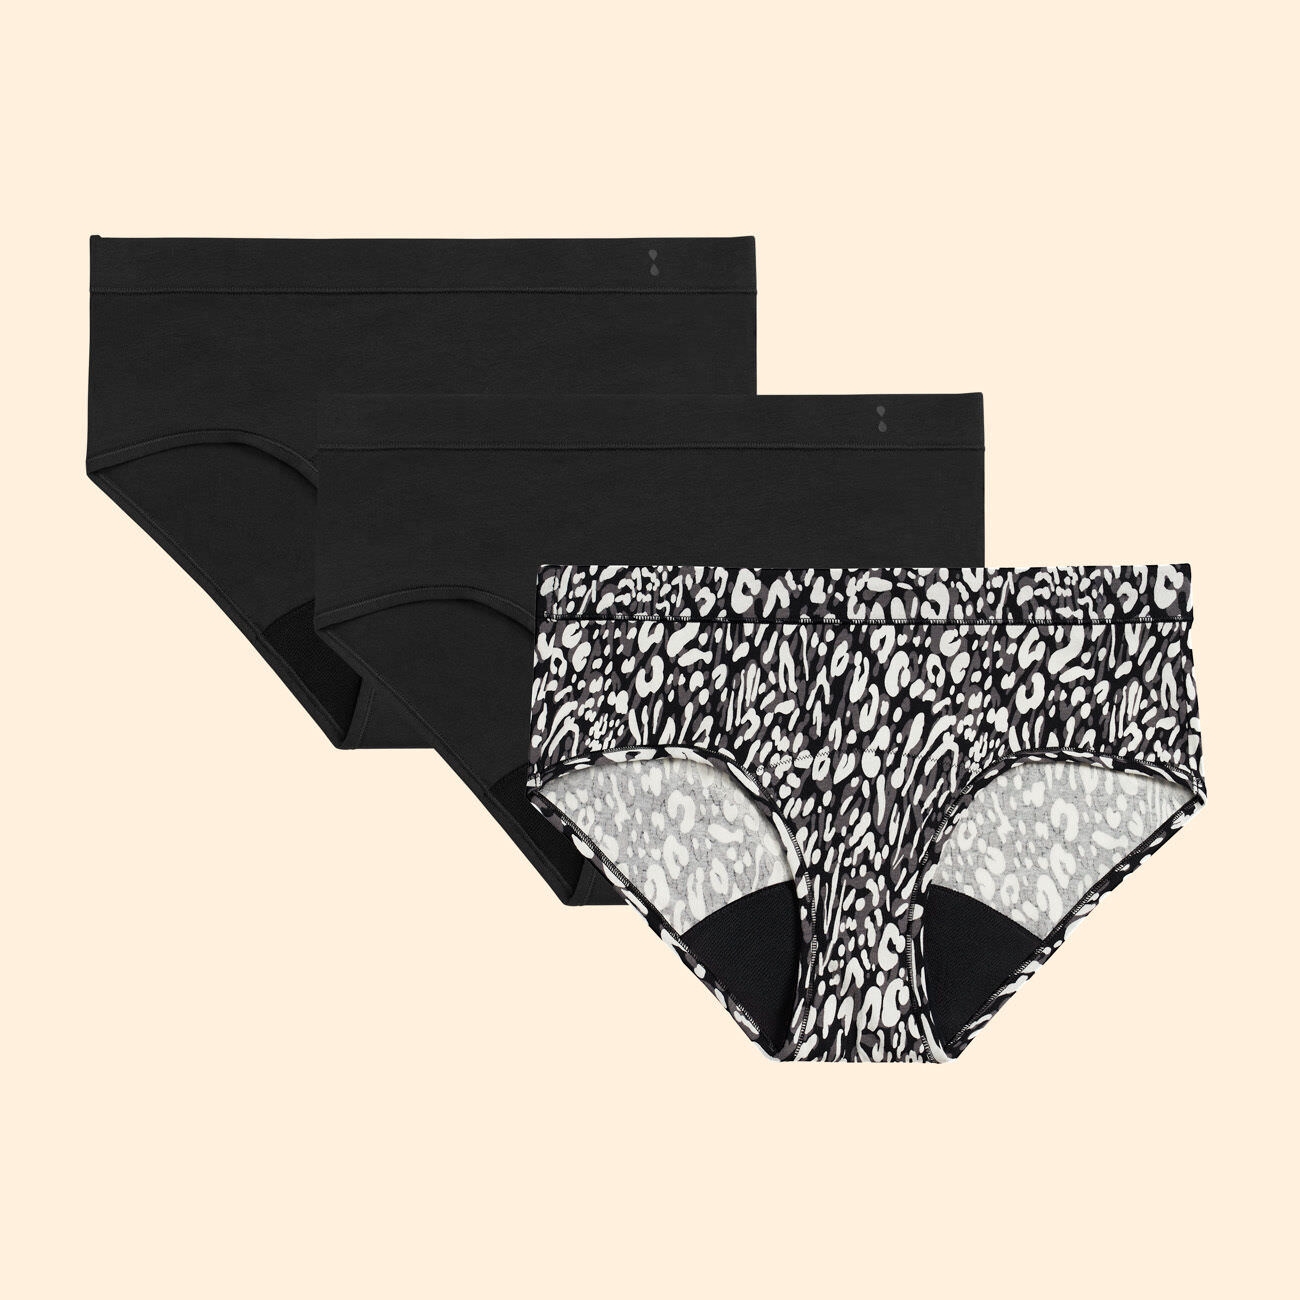 Thinx for All - Reusable Period Underwear Black Brief Super